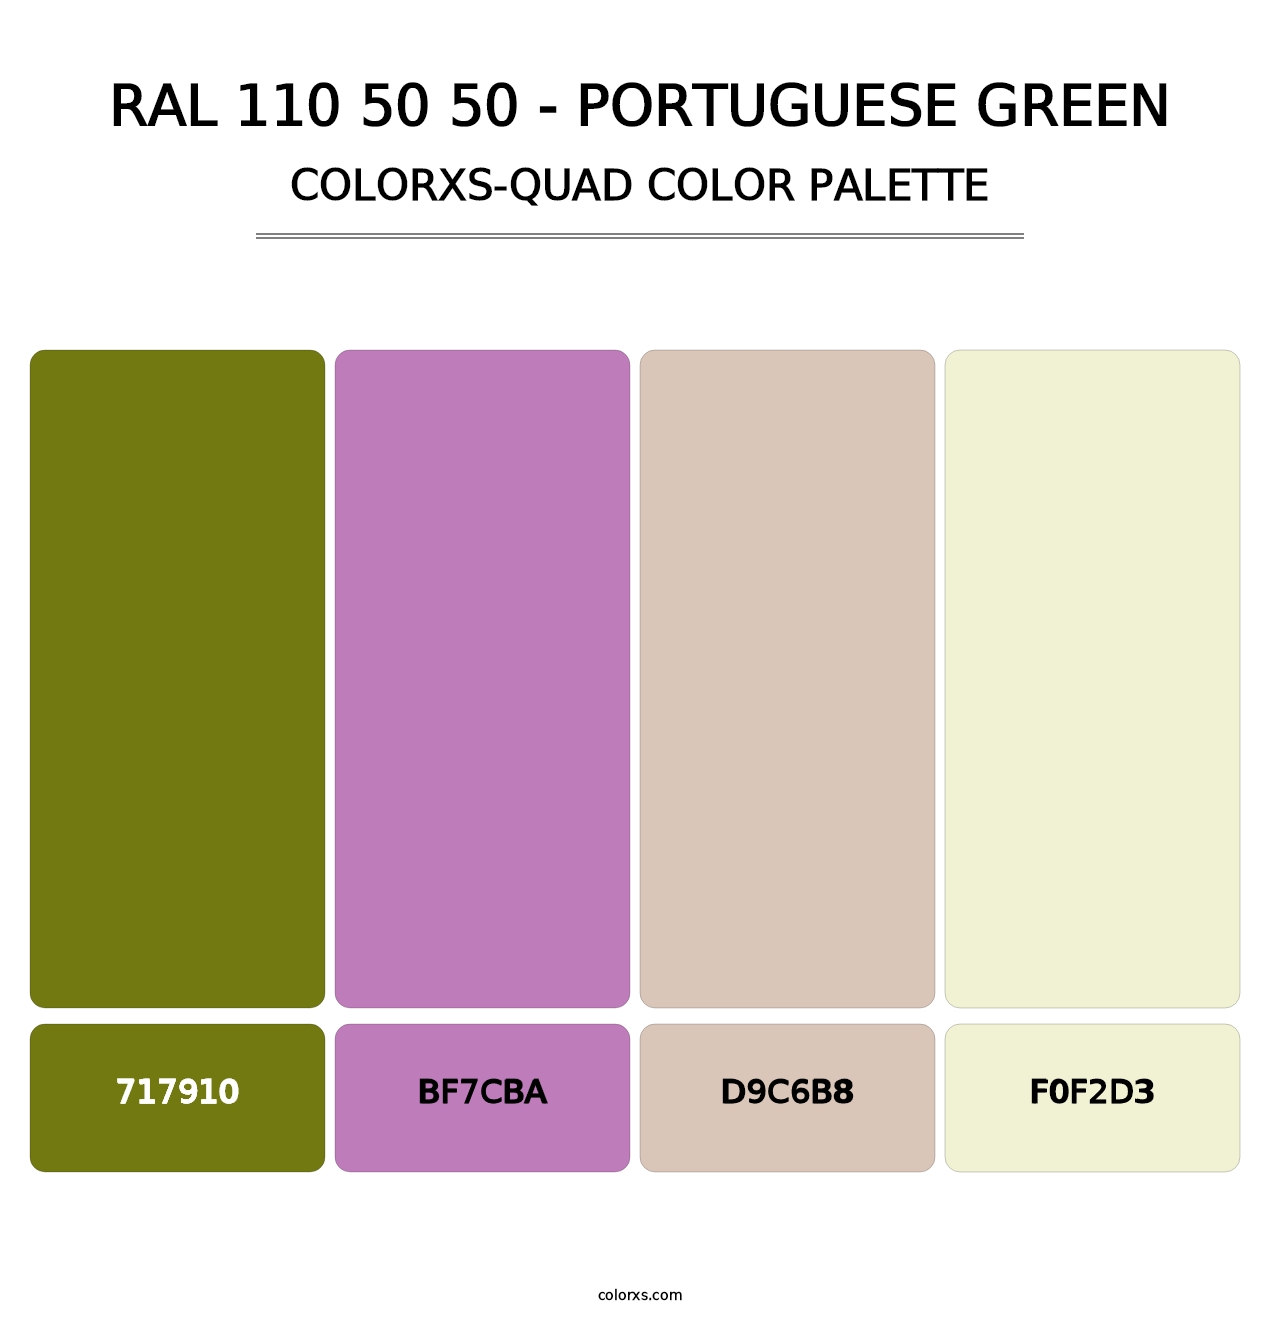 RAL 110 50 50 - Portuguese Green - Colorxs Quad Palette